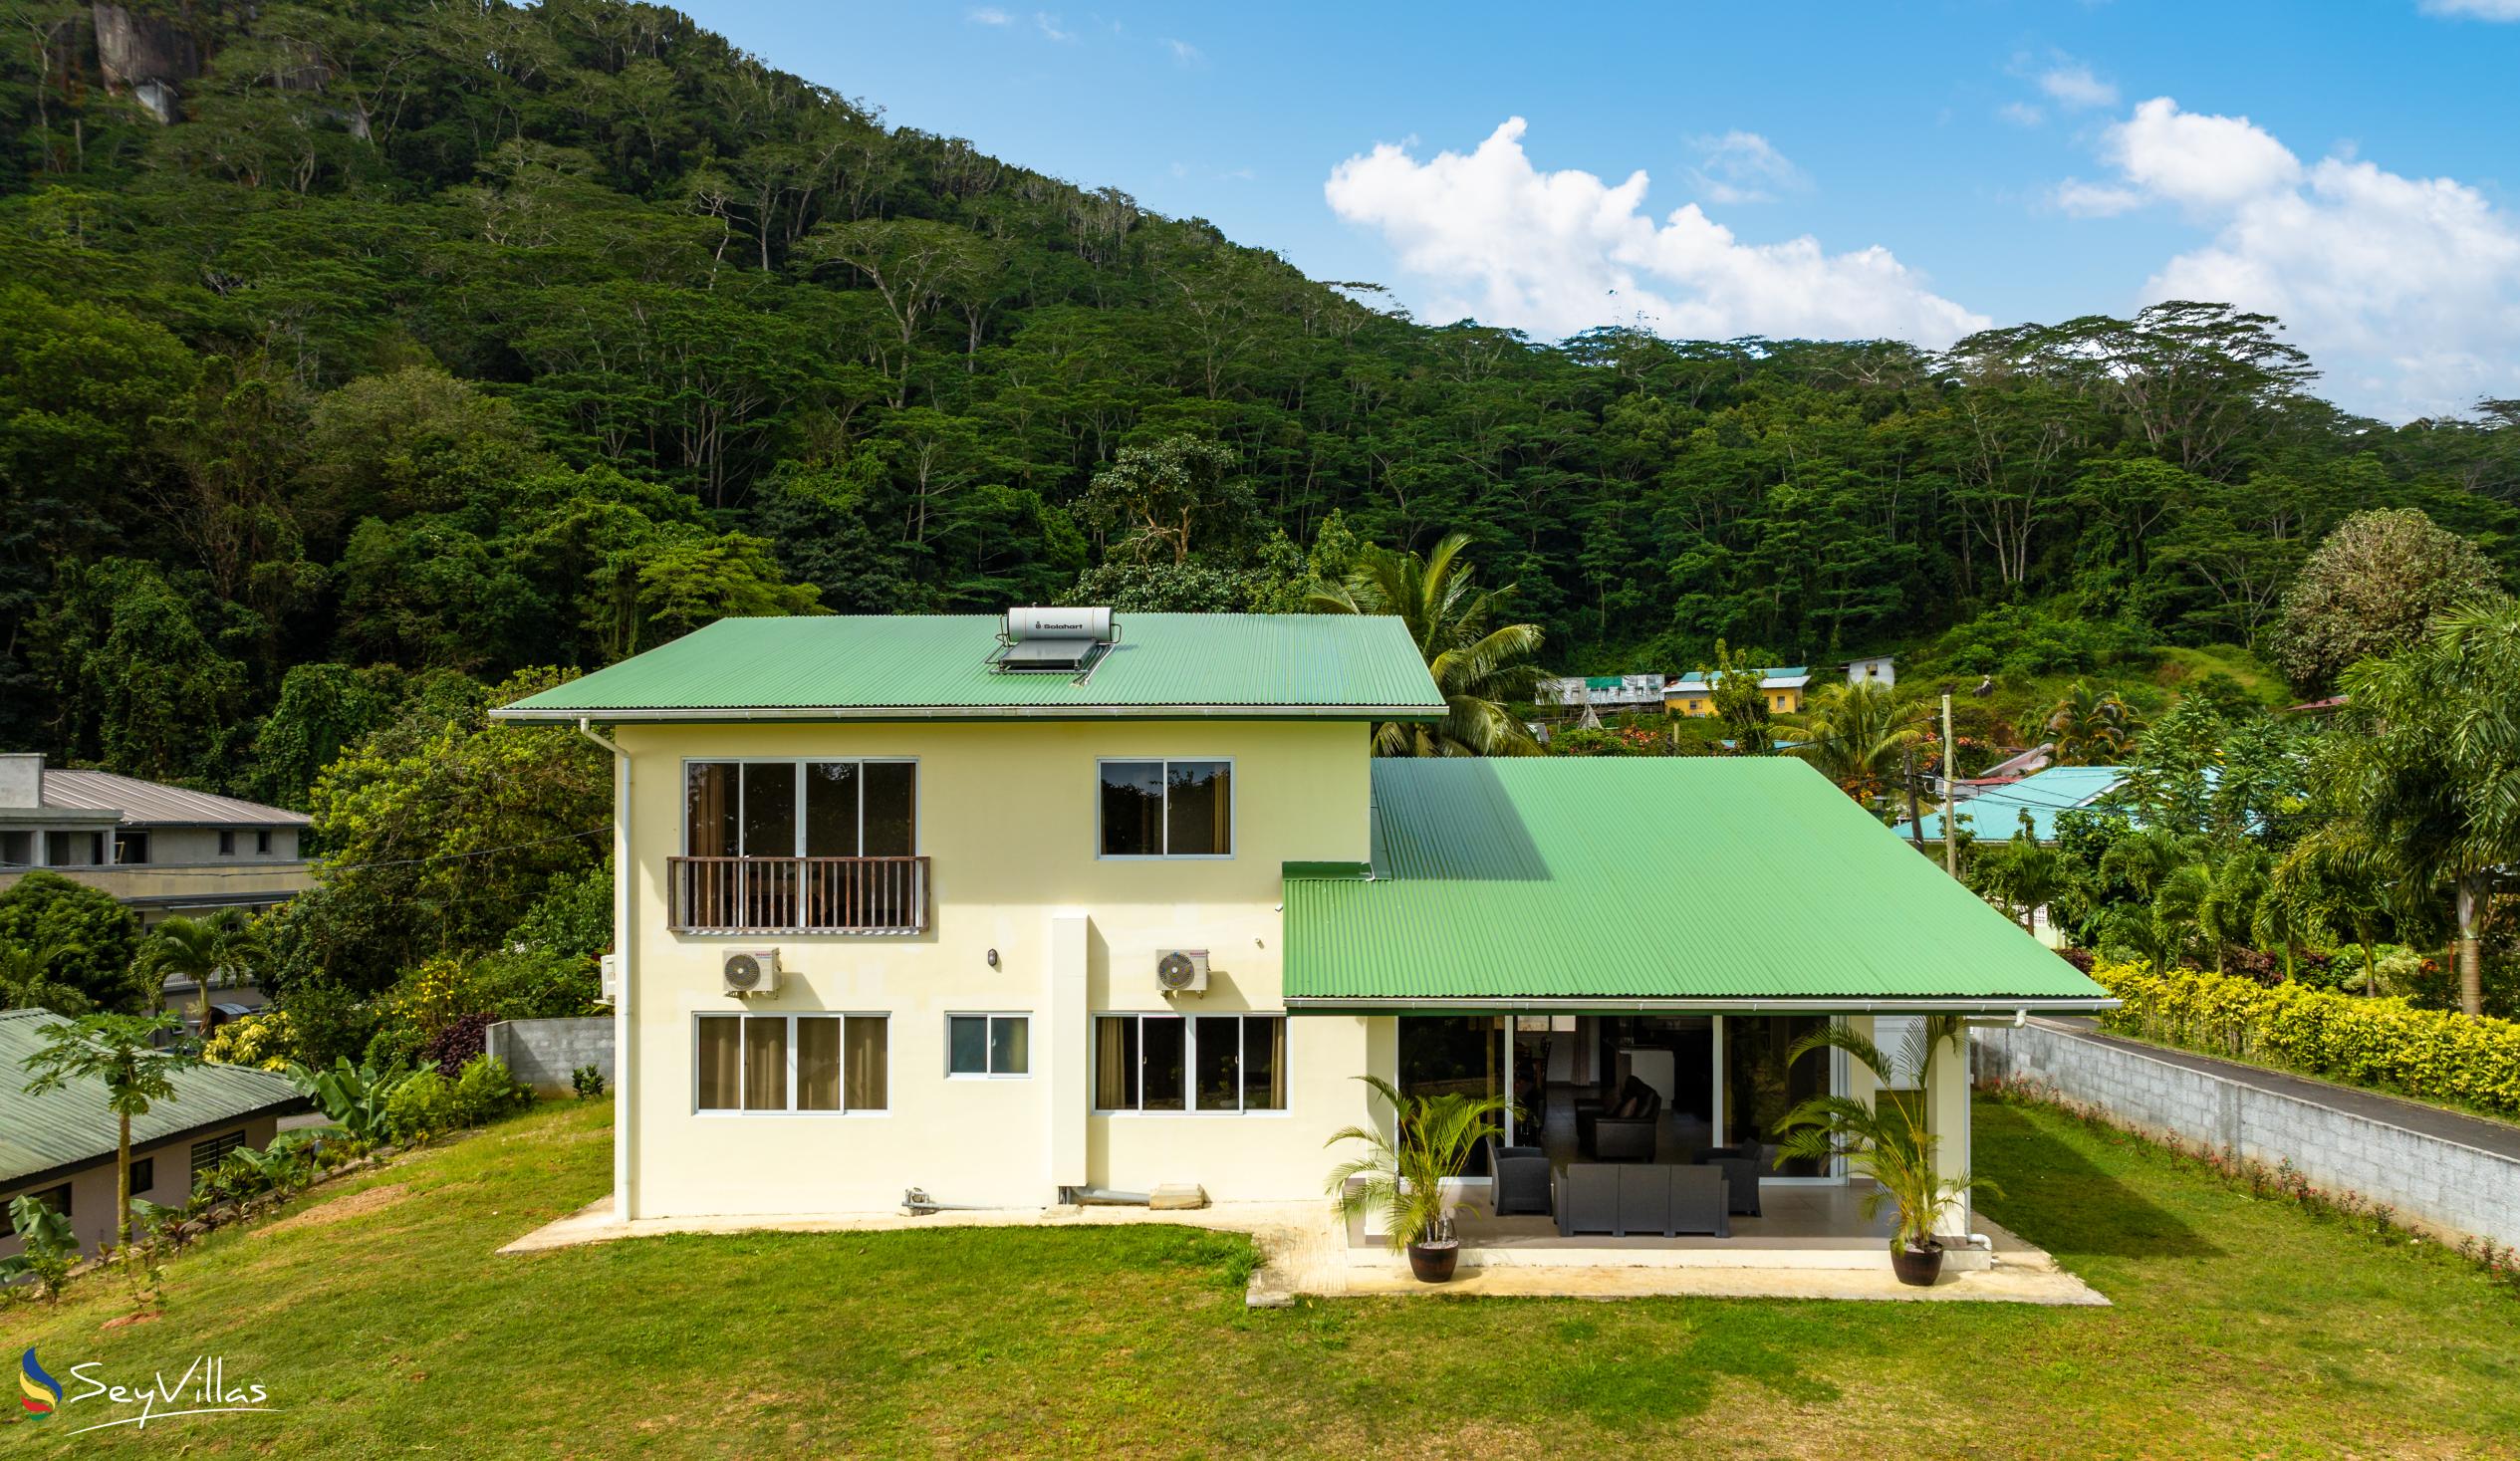 Photo 1: Maison Dora - Outdoor area - Mahé (Seychelles)